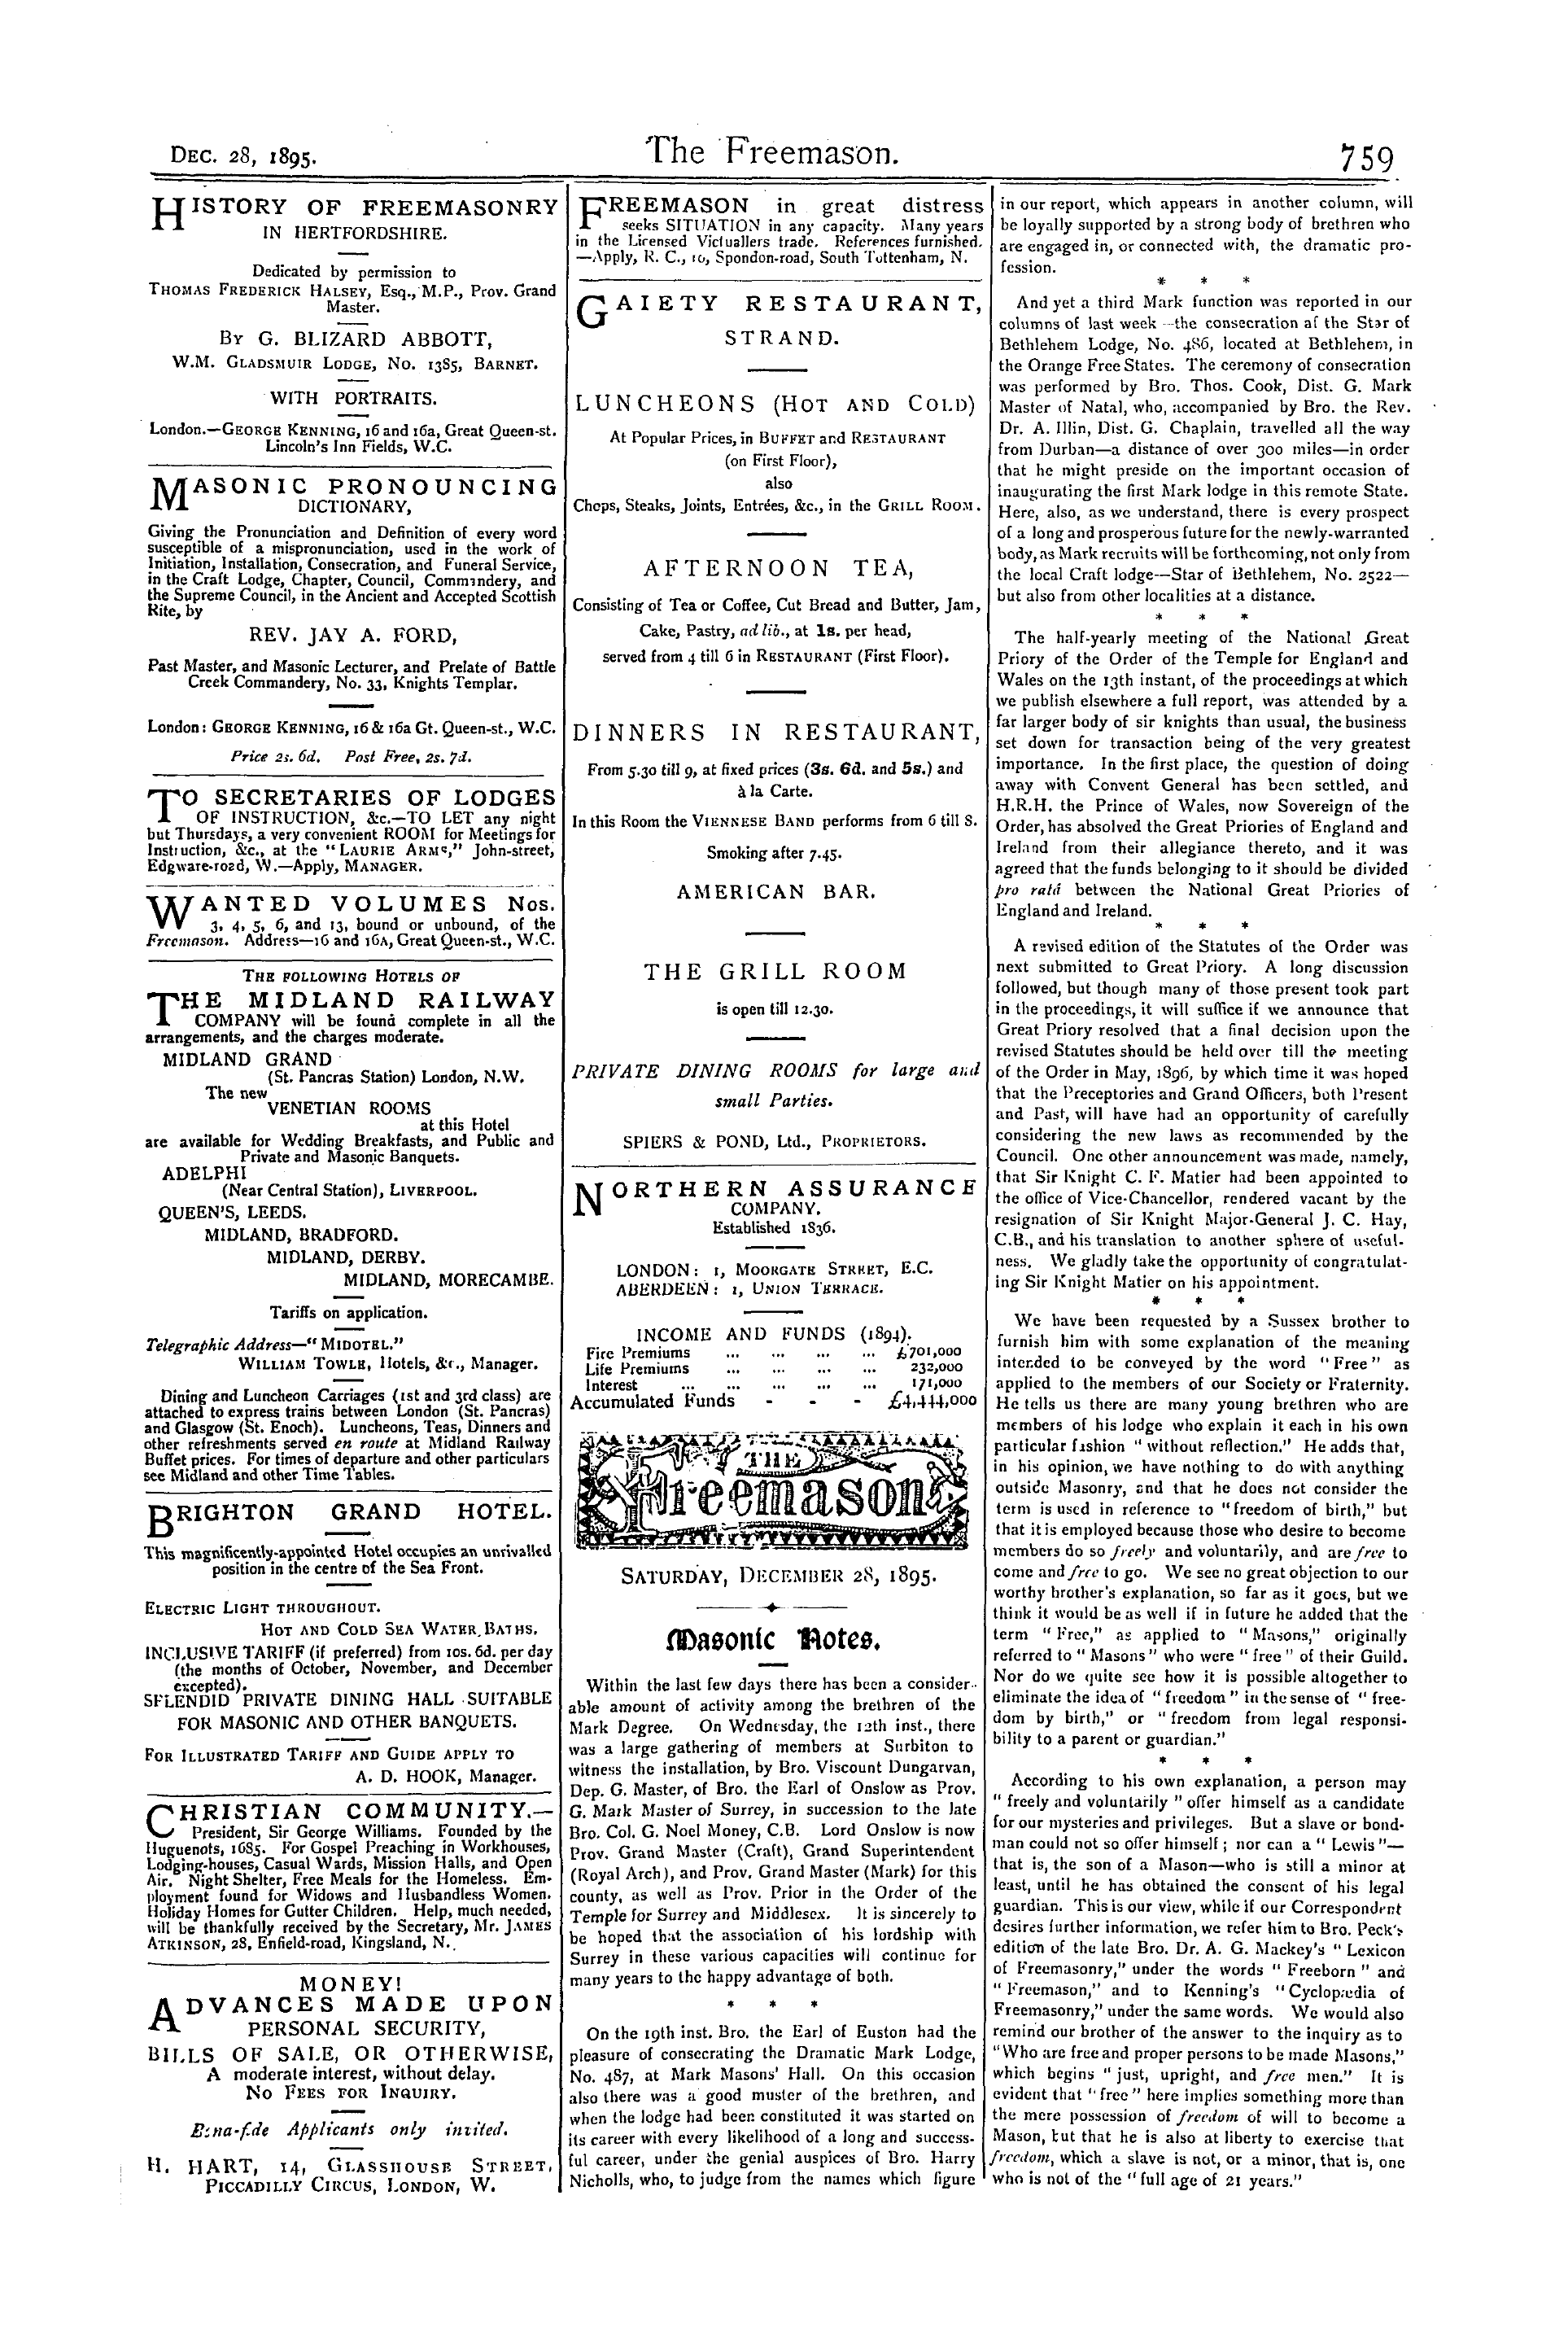 The Freemason: 1895-12-28: 9